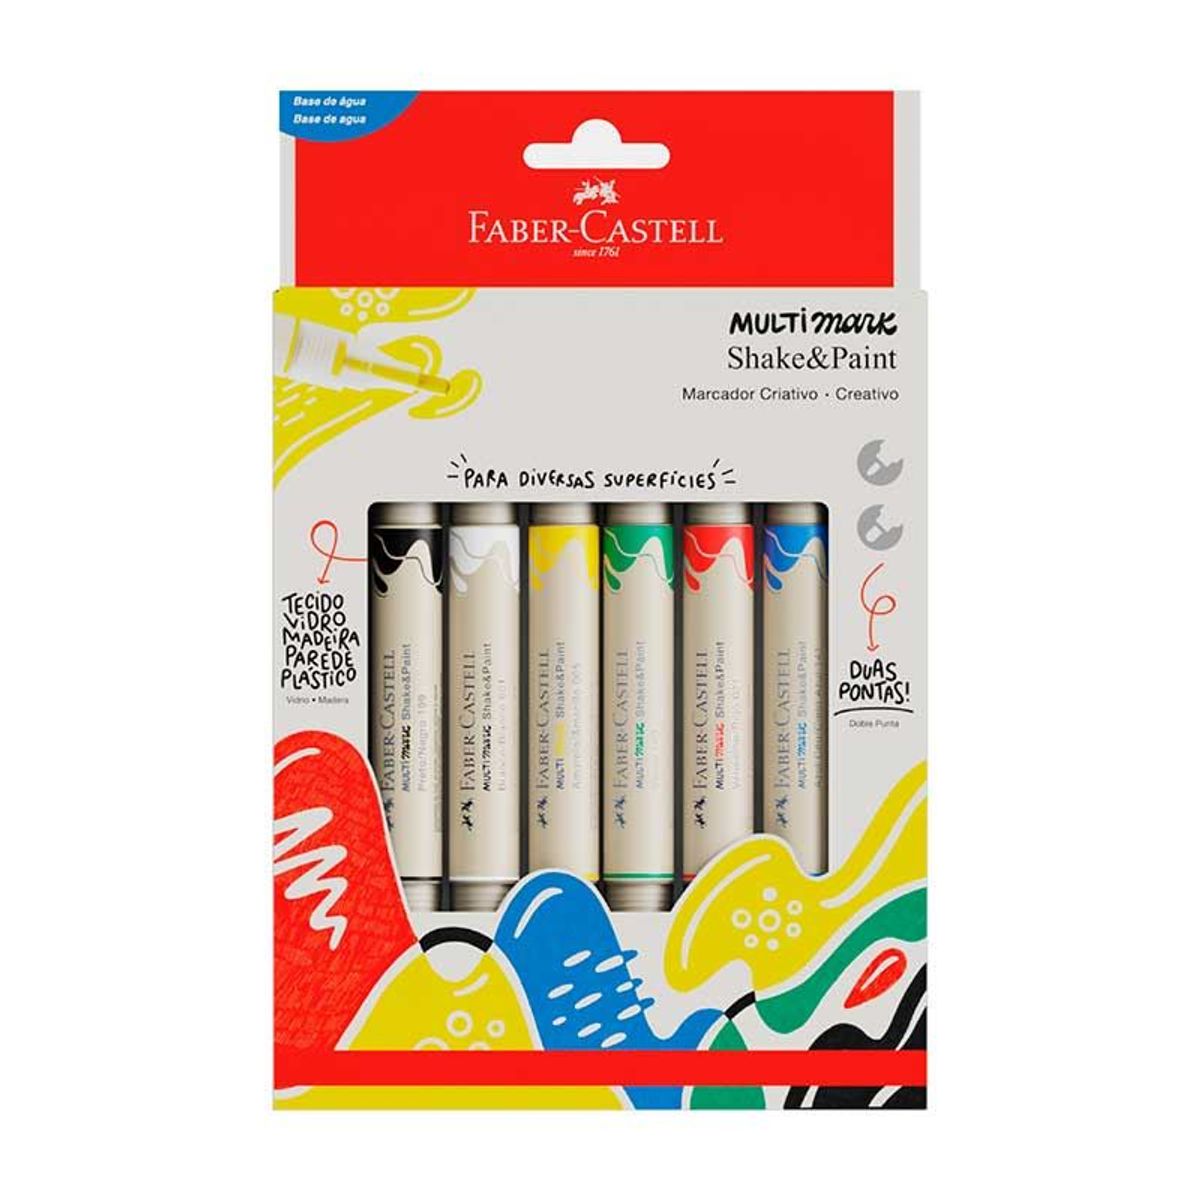 Marcador Faber Castel Multimark Shake & Paint 6 Cores